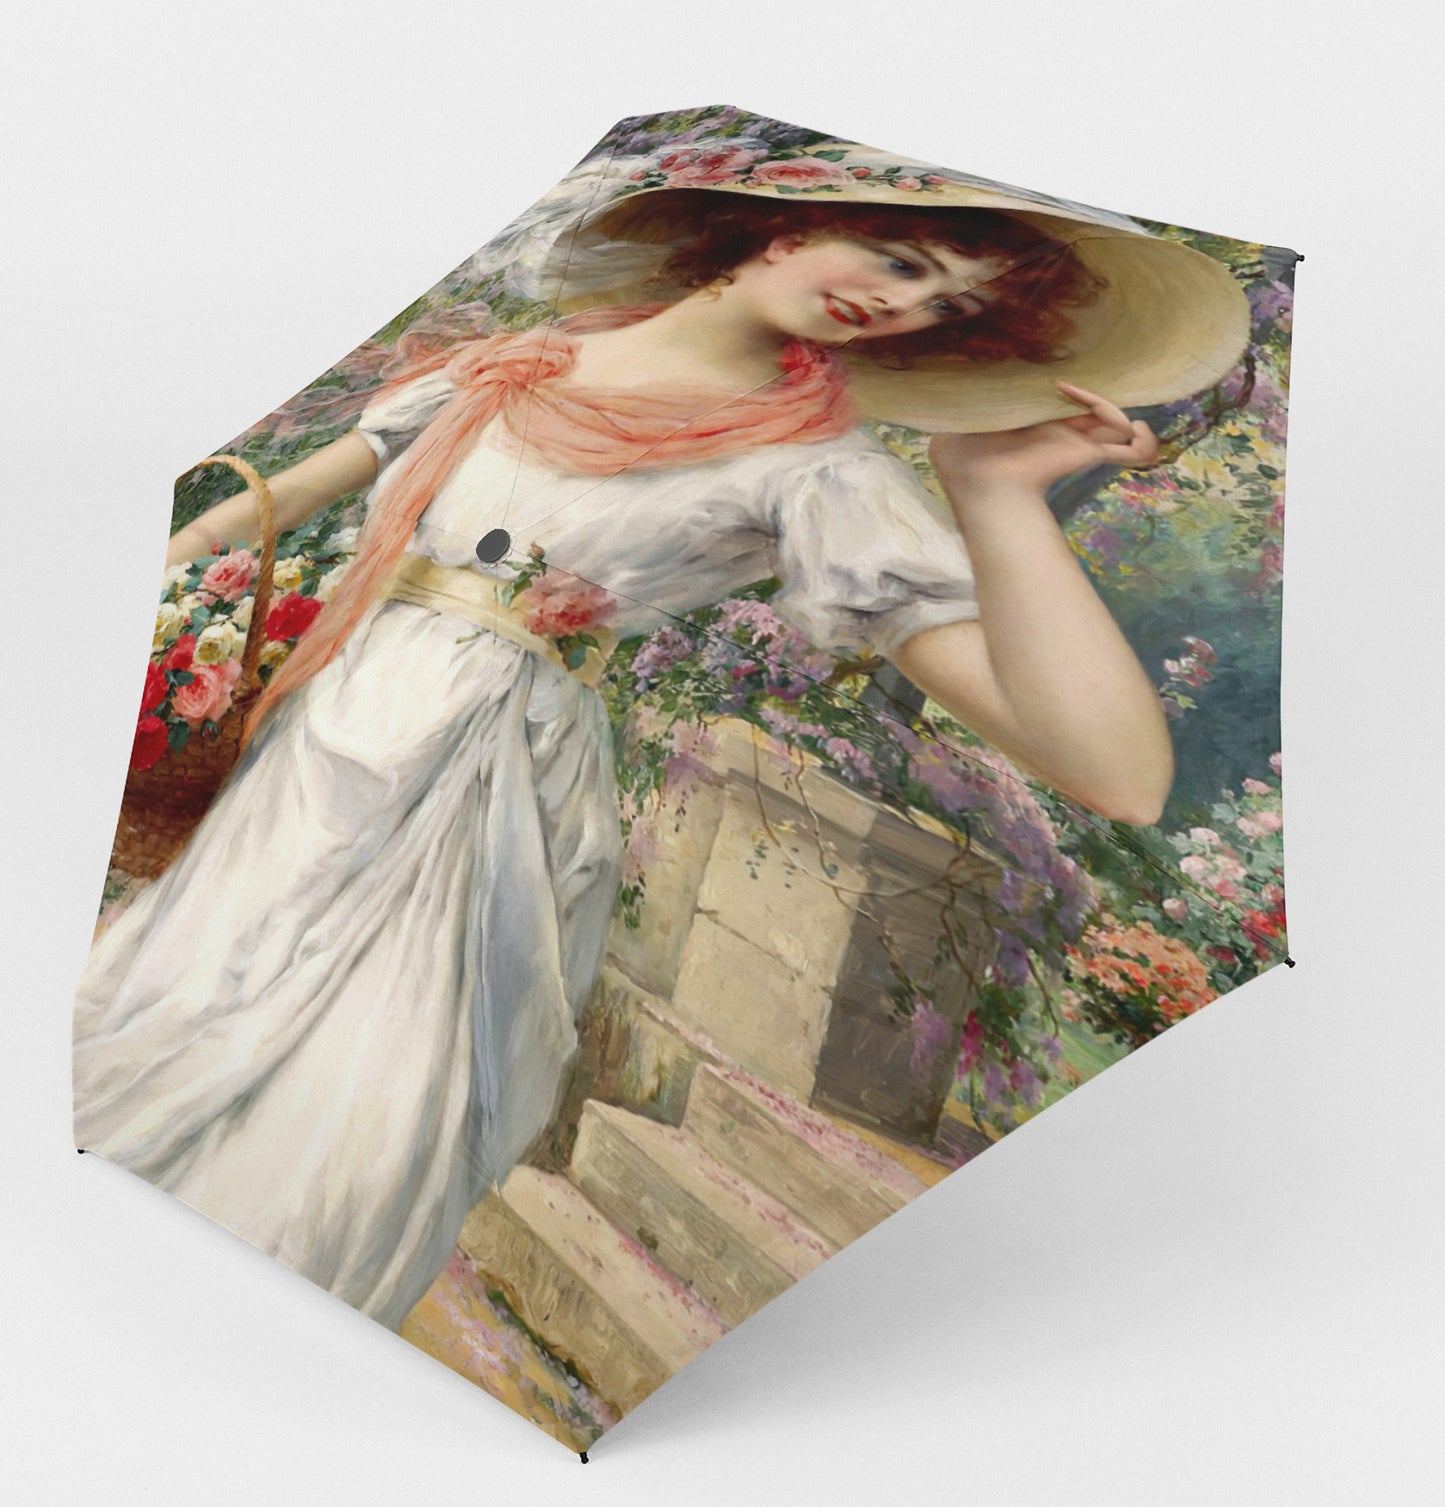 Victorian Lady Design UMBRELLA, THE FLOWER GARDEN Model U50-C20